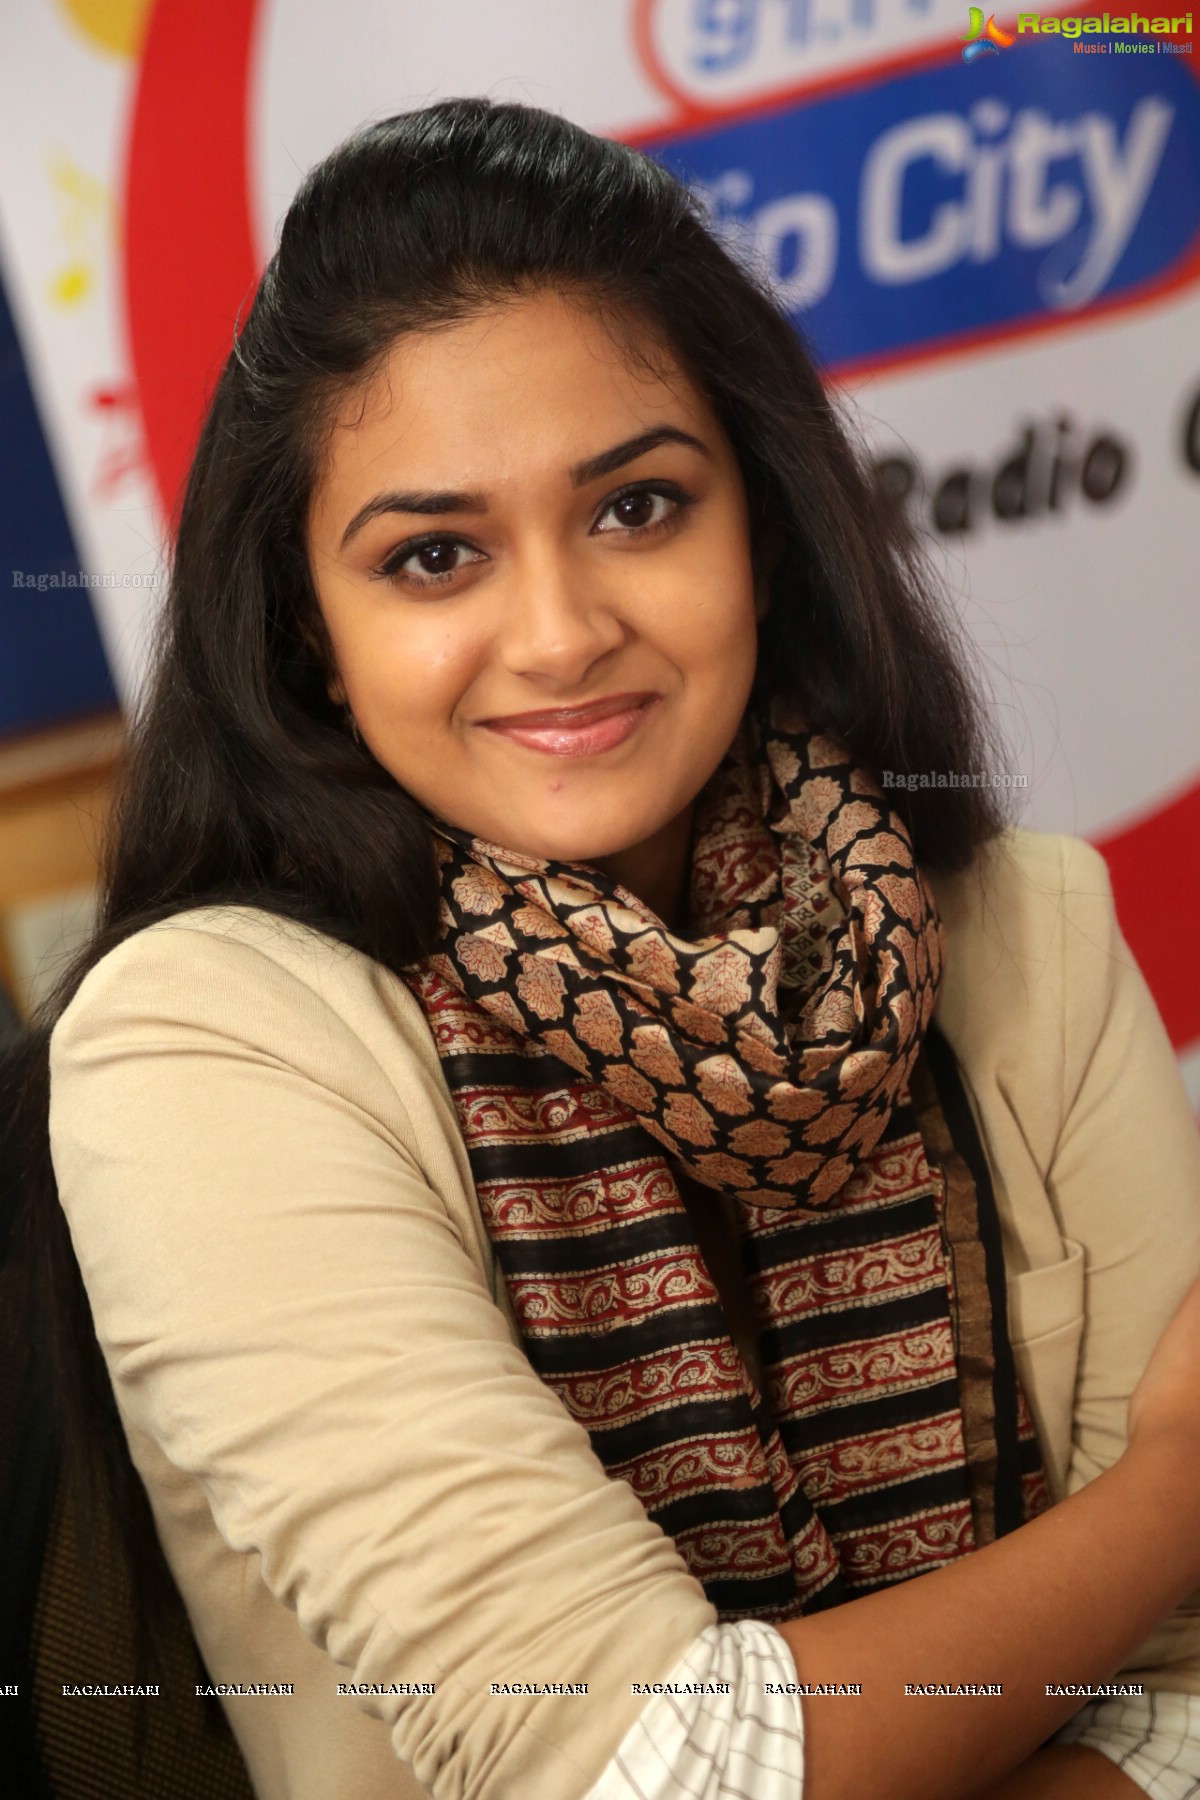 Keerthy Suresh at 91.1 FM Radio City